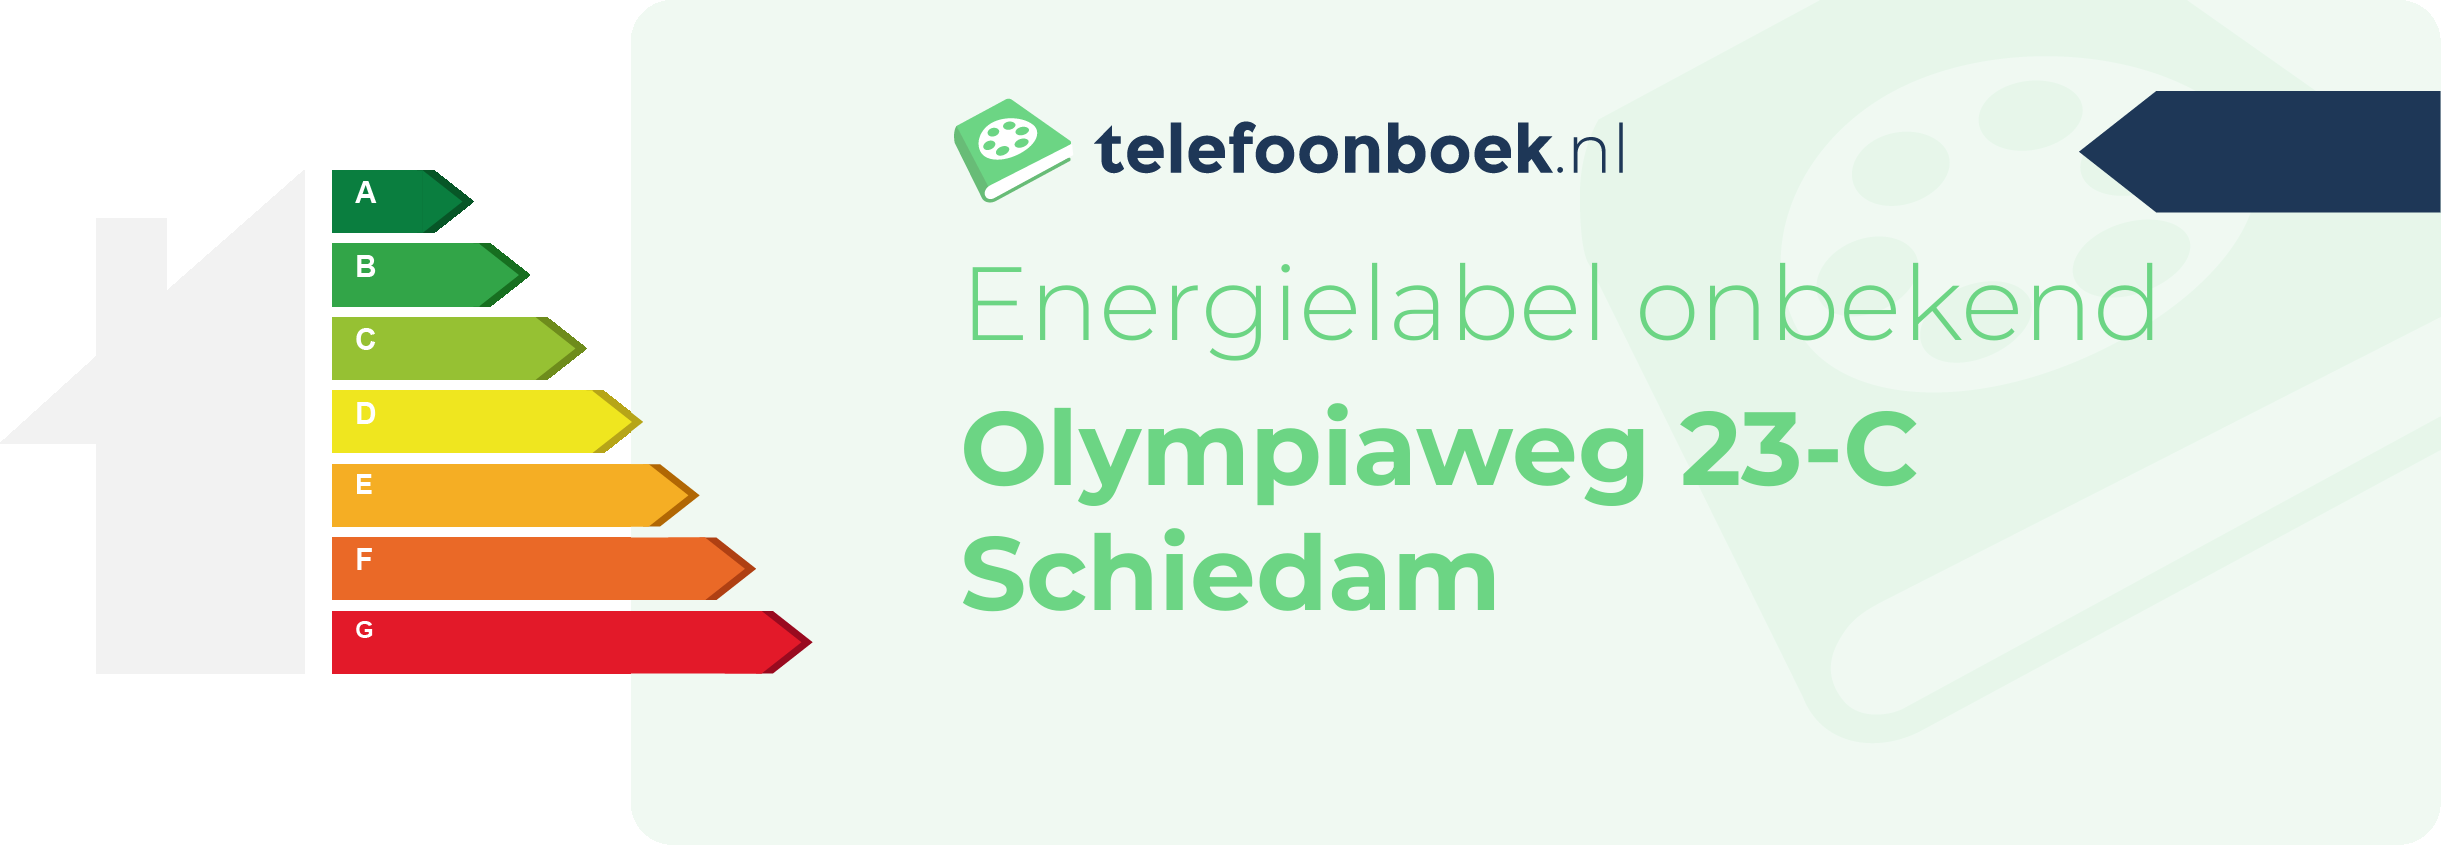 Energielabel Olympiaweg 23-C Schiedam